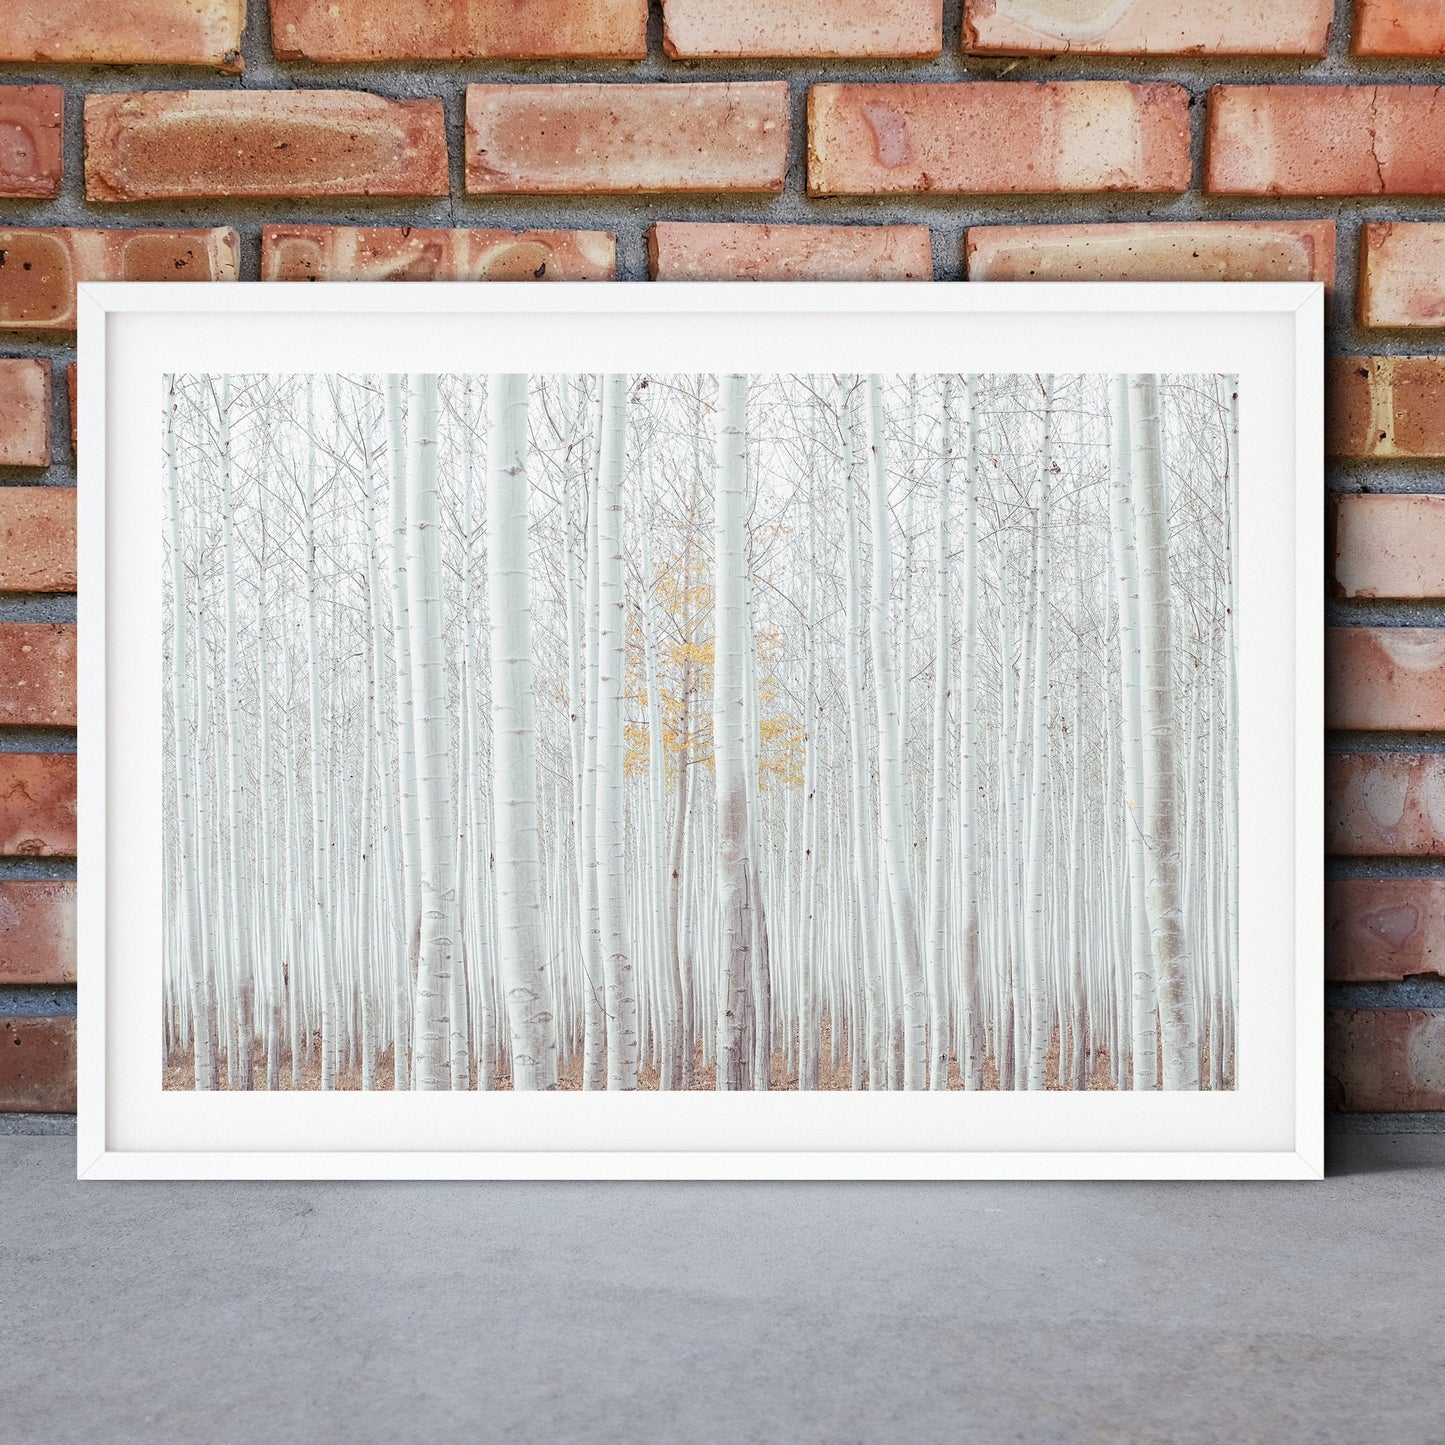 Framed White Birch trees print, birch photo abstract landscape print, minimalist landscape nature photography print, birch forest art